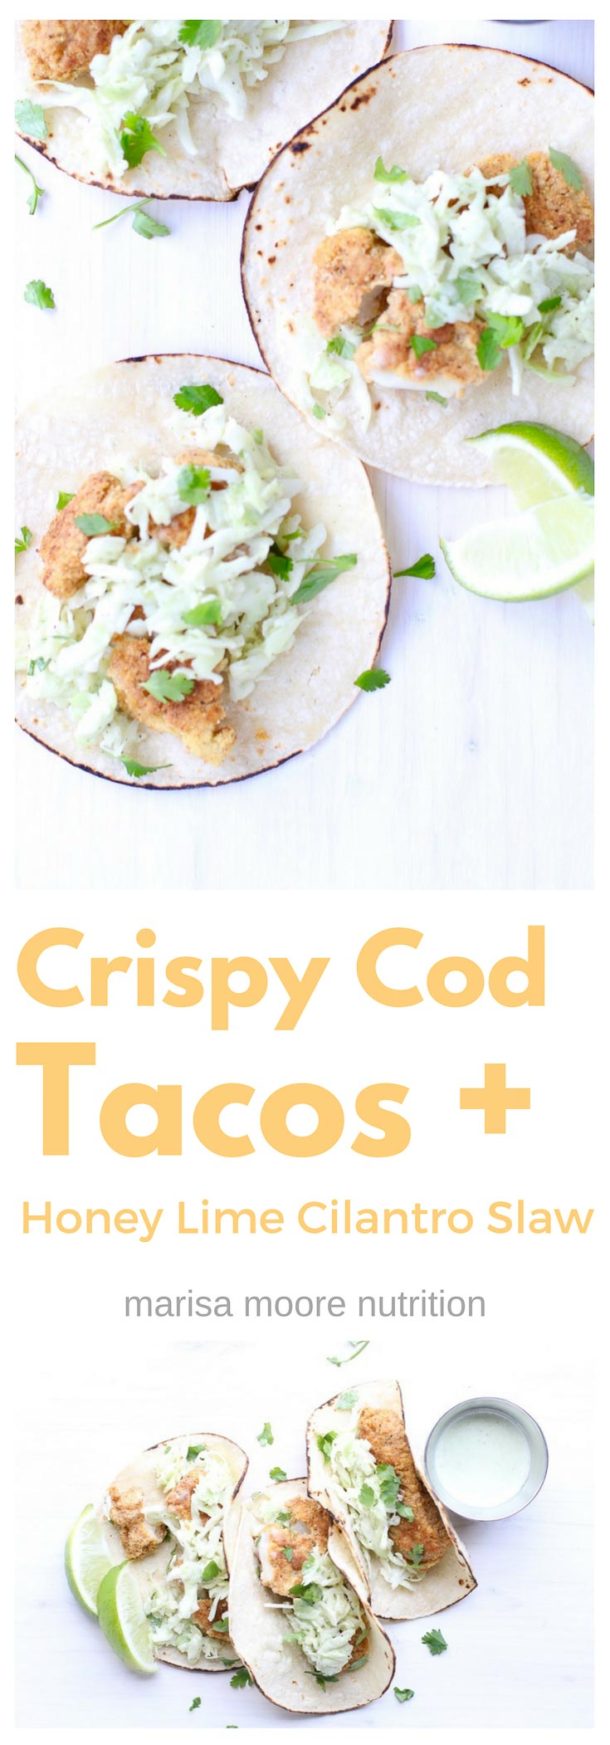 Crispy Fish Tacos with Honey-Lime Cilantro Slaw | Marisa Moore Nutrition